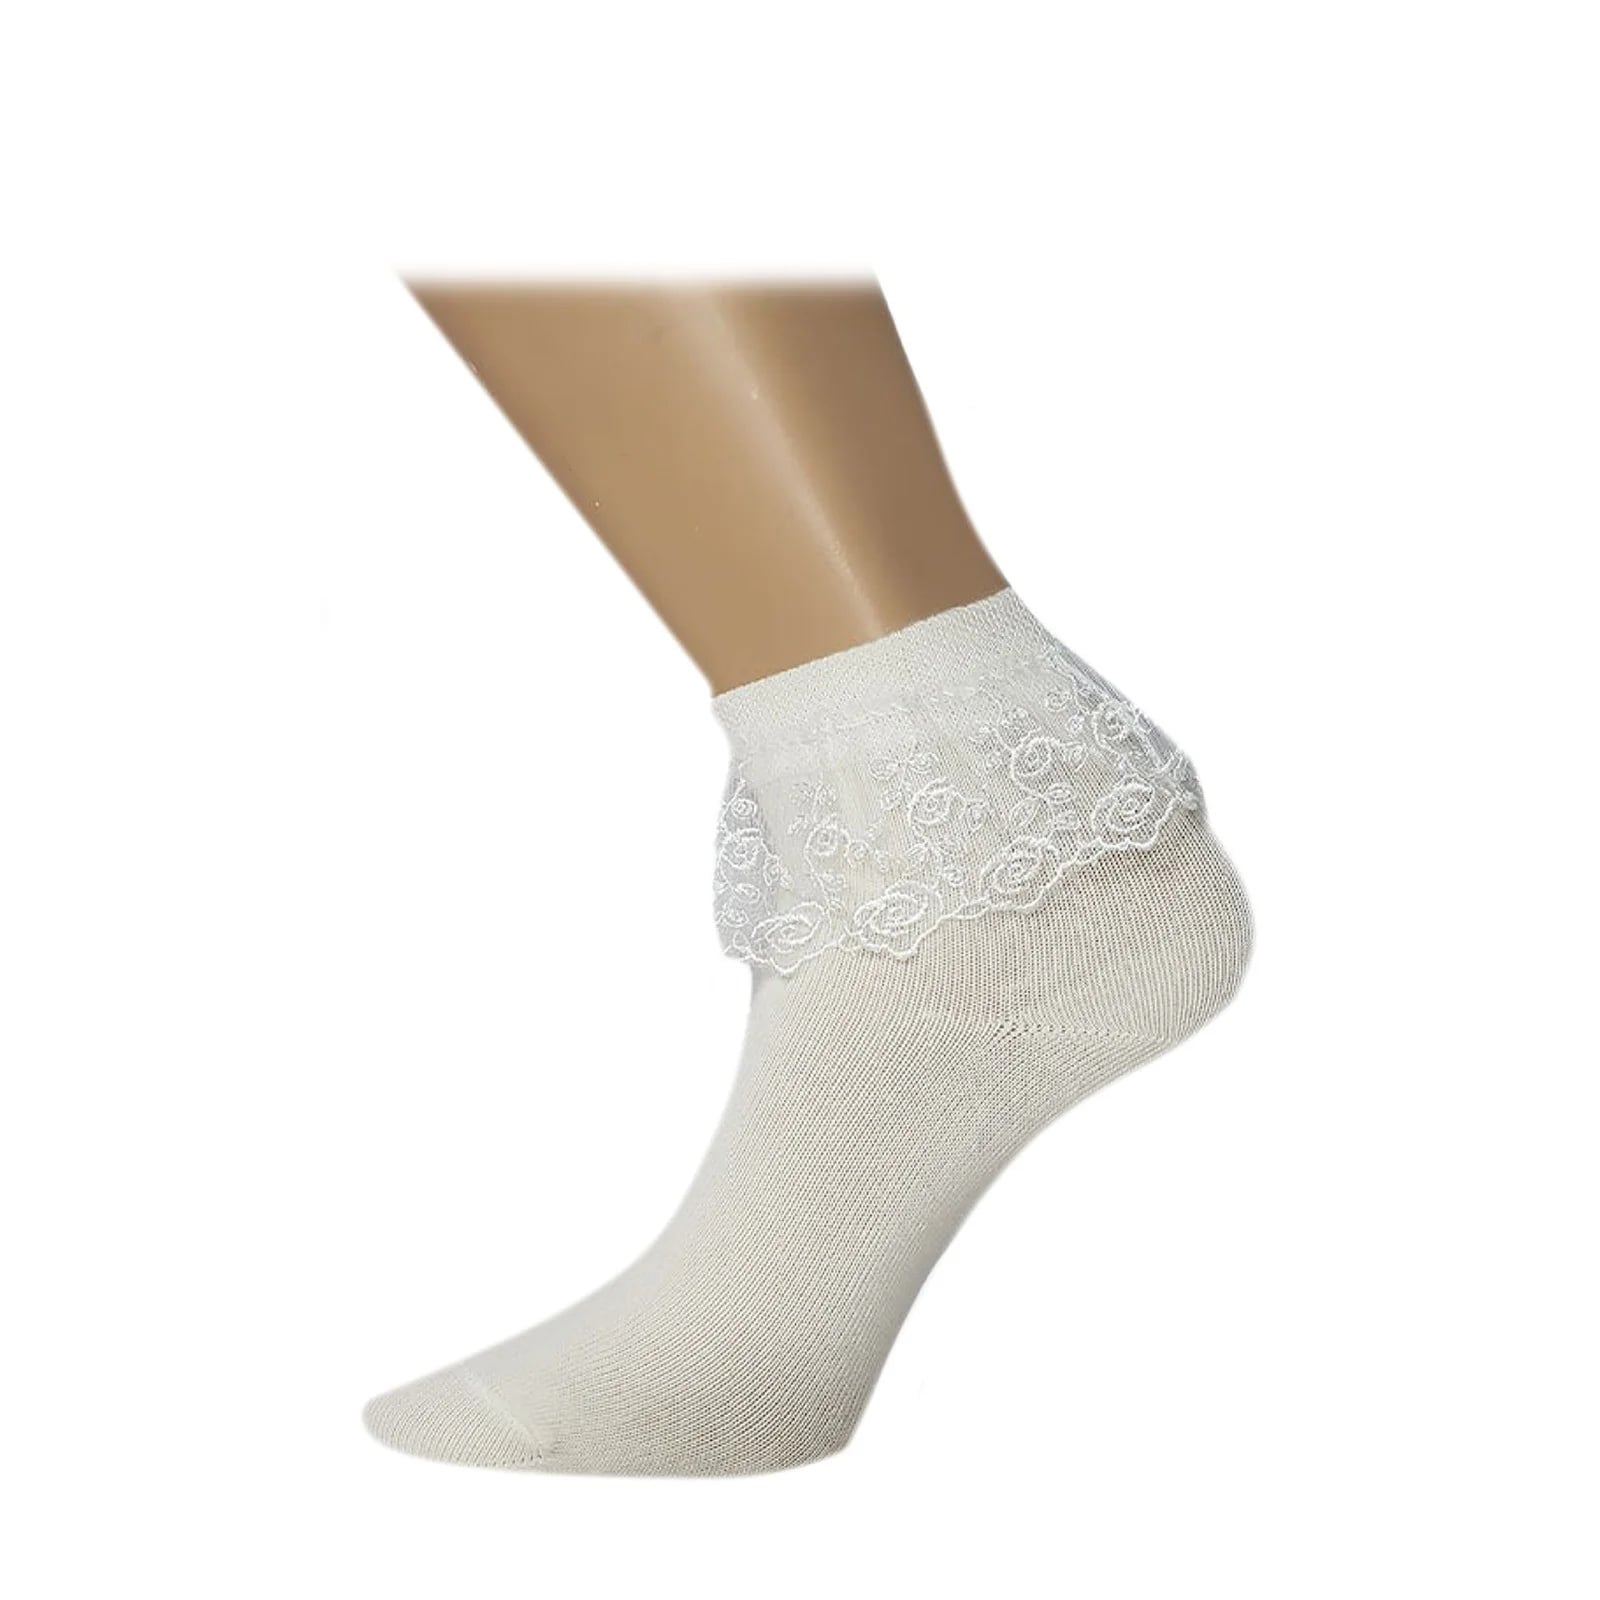 Orkinza Socks Off white Color From AL Samah